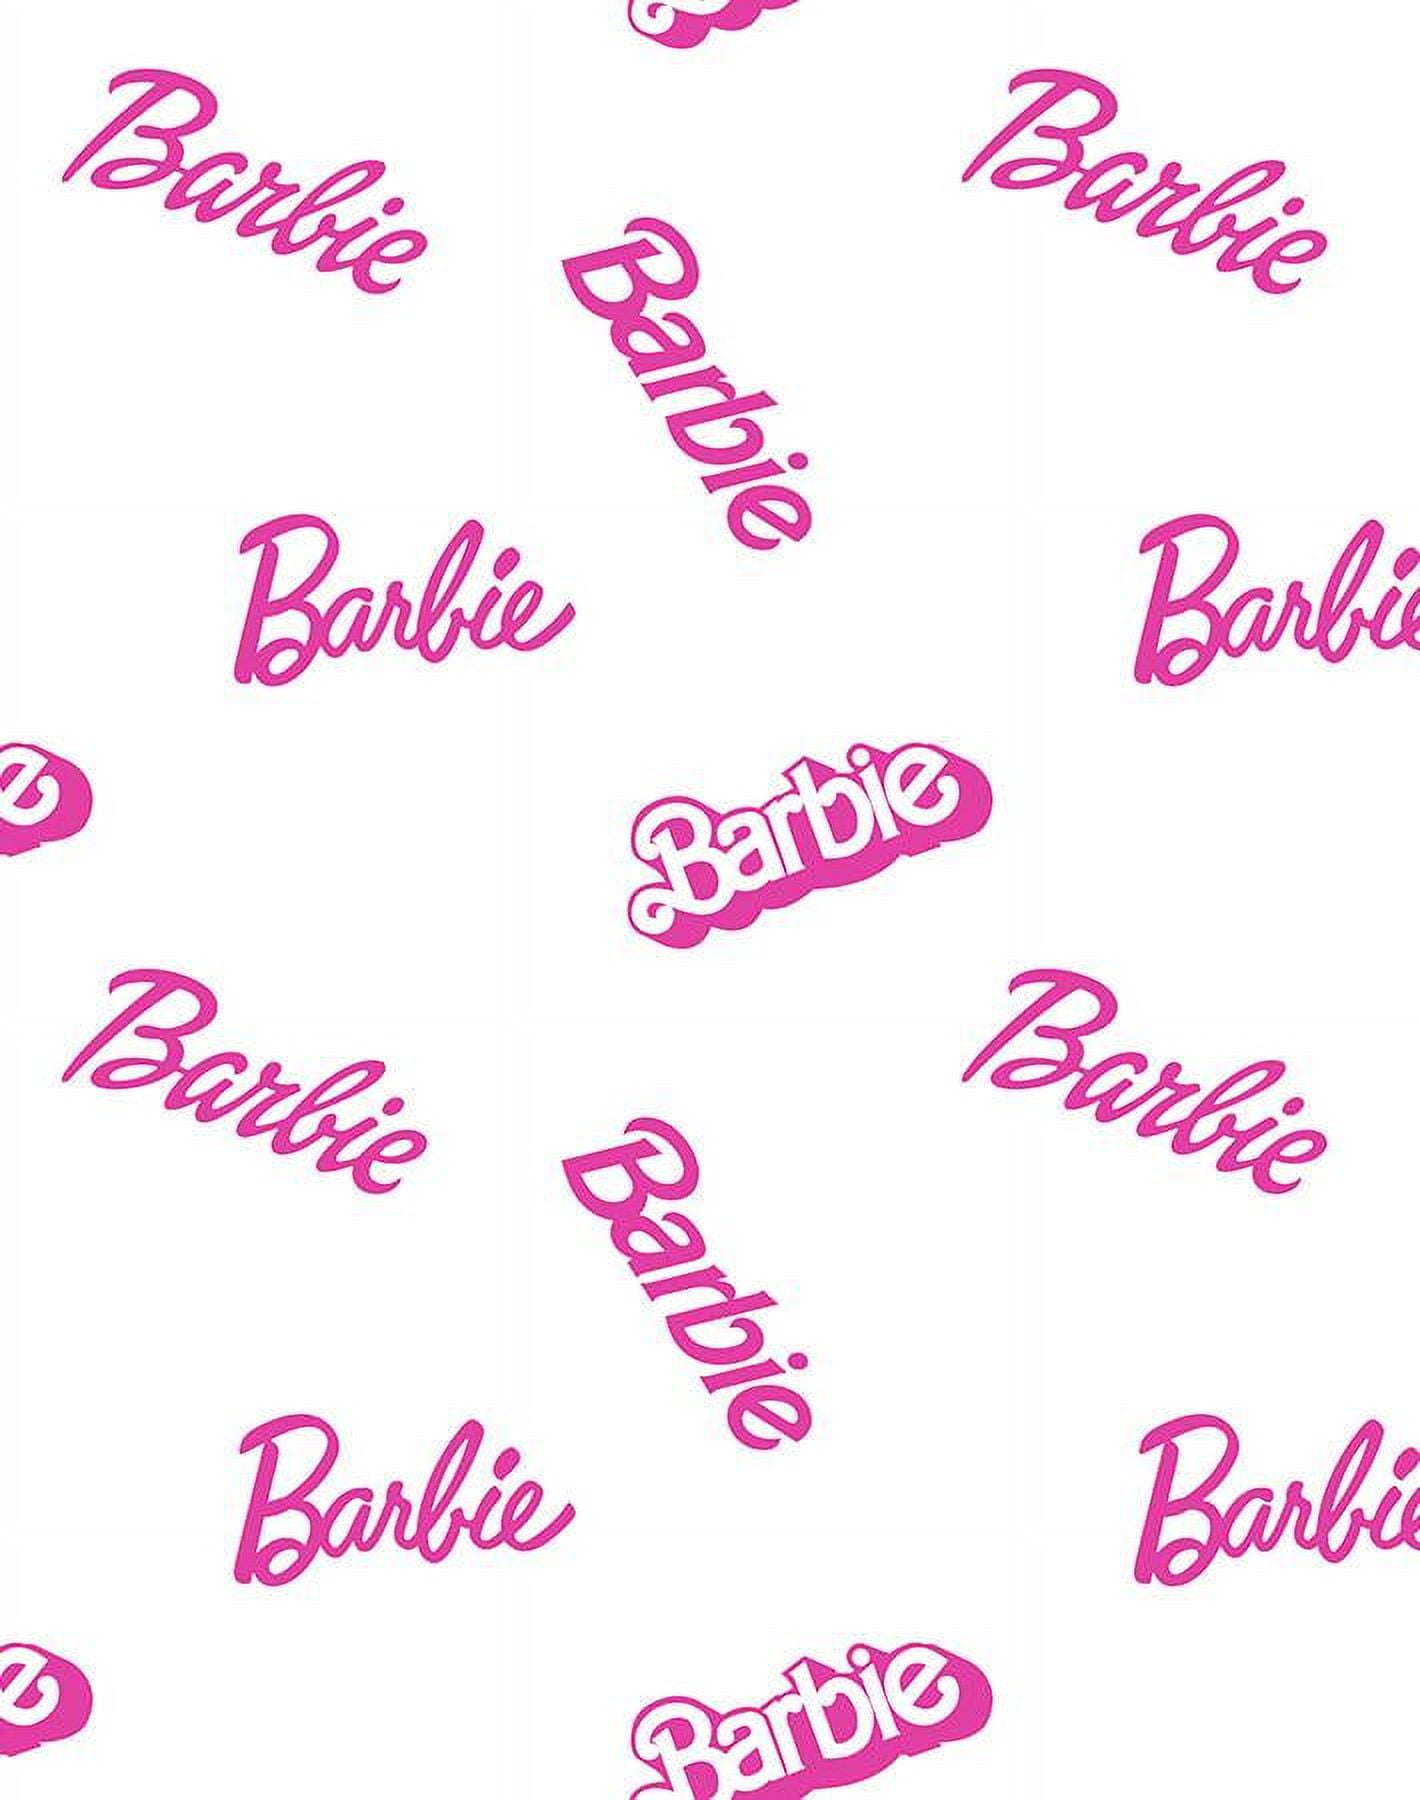 HD wallpaper: Man Made, Logo, Barbie, Brand